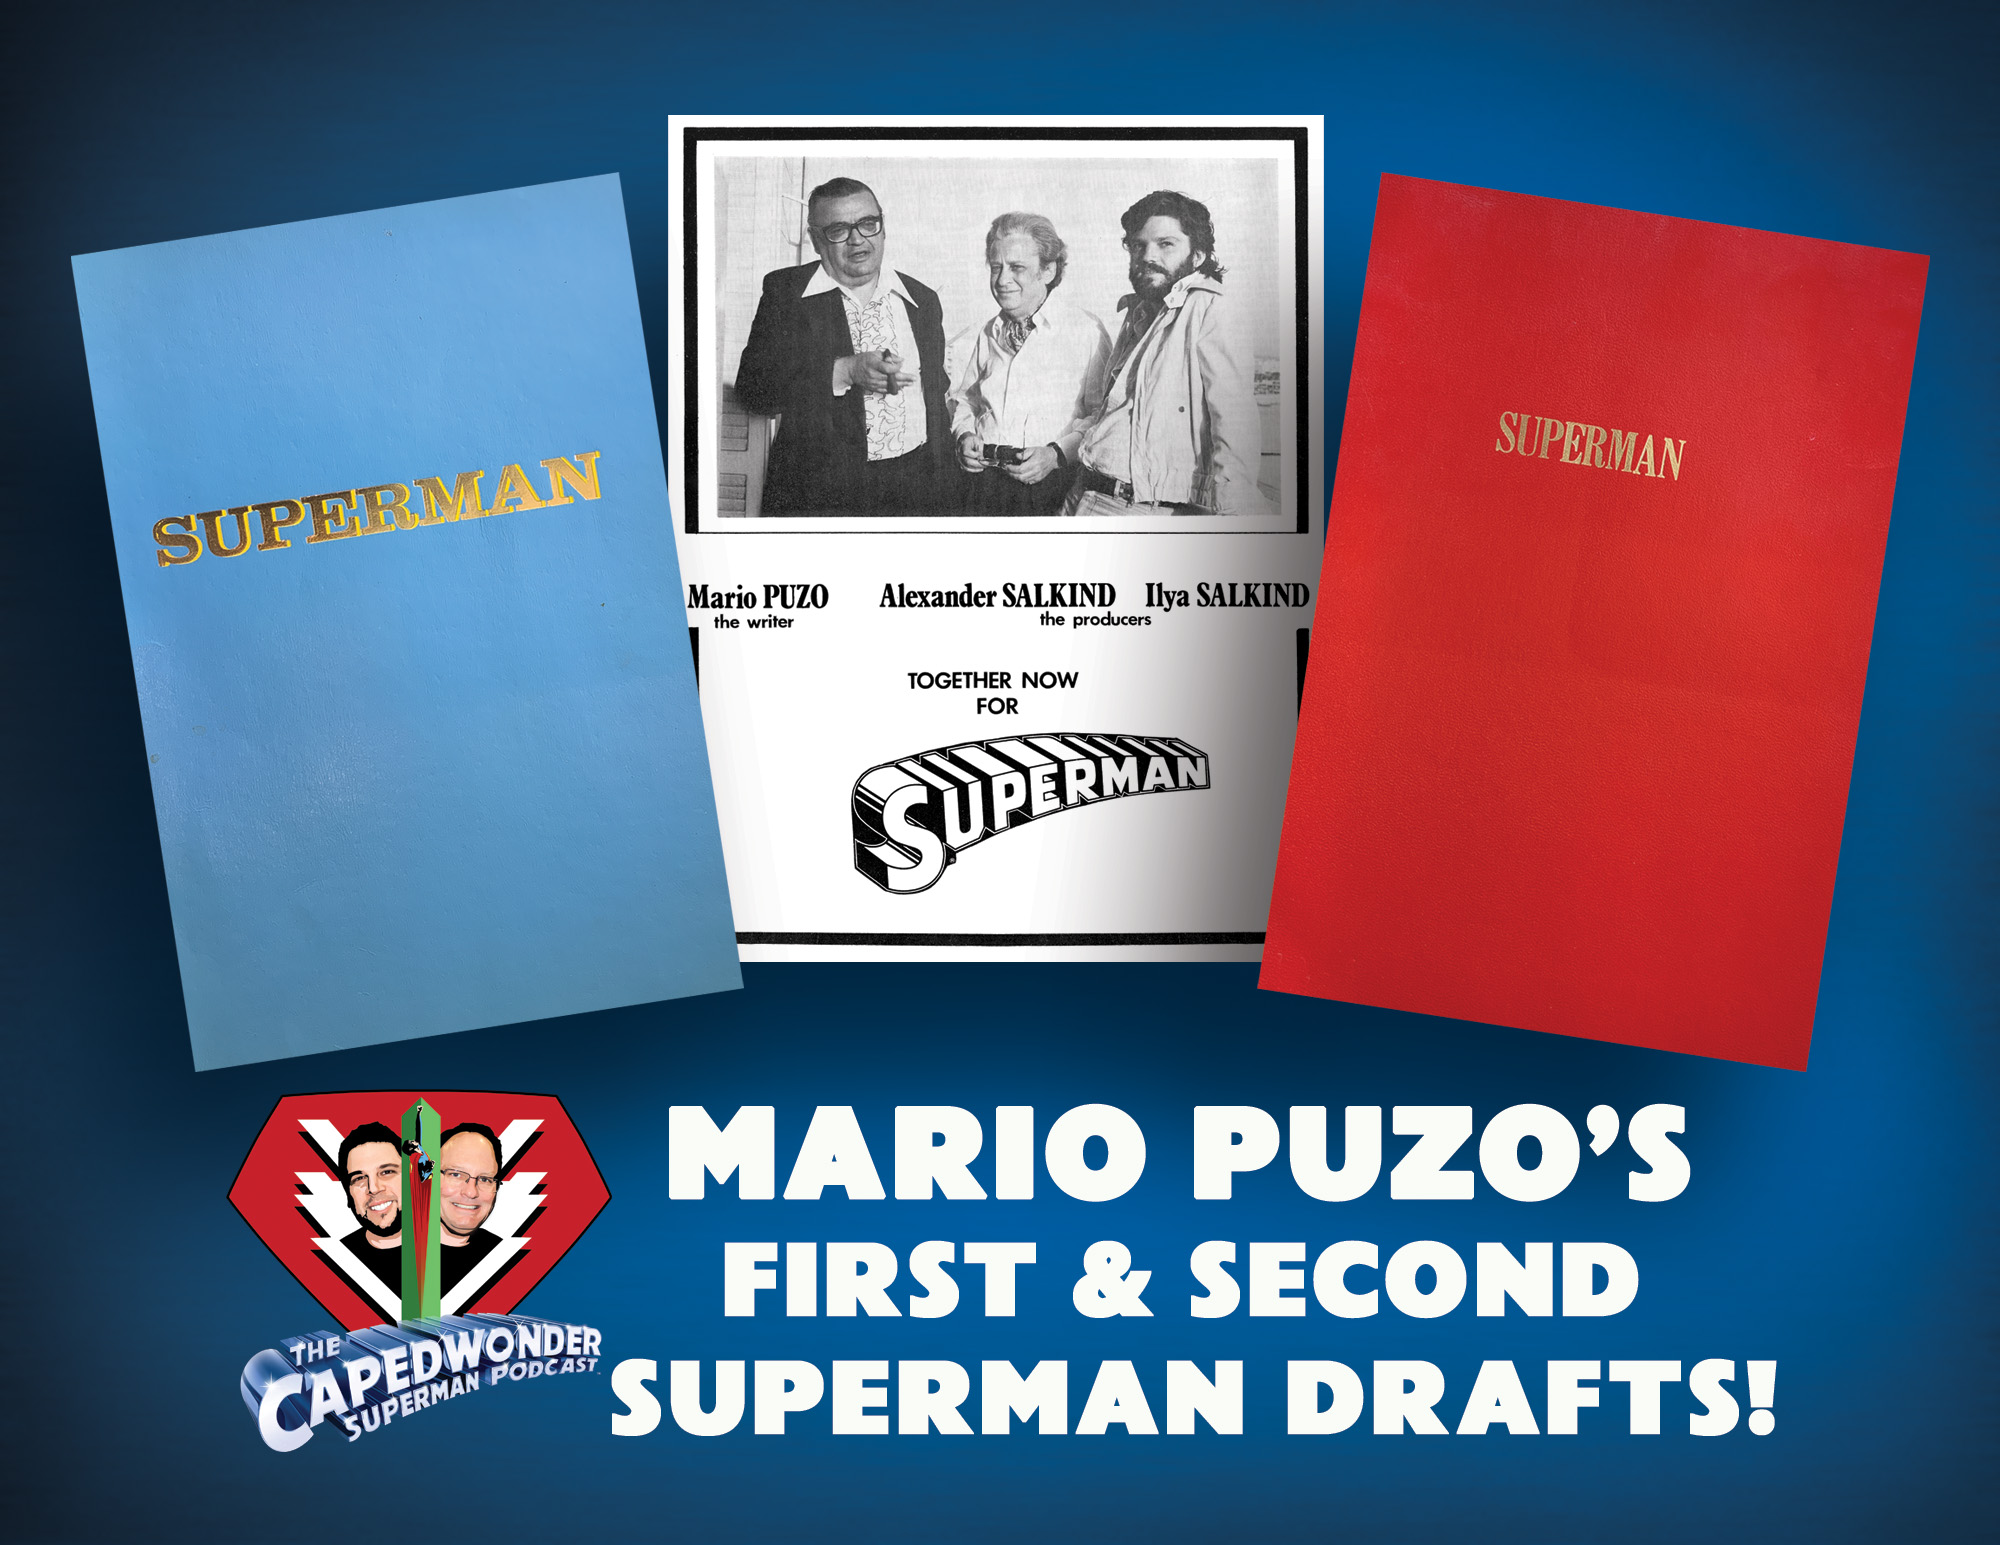 CapedWonder-Mario-Puzo-Superman-drafts-banner